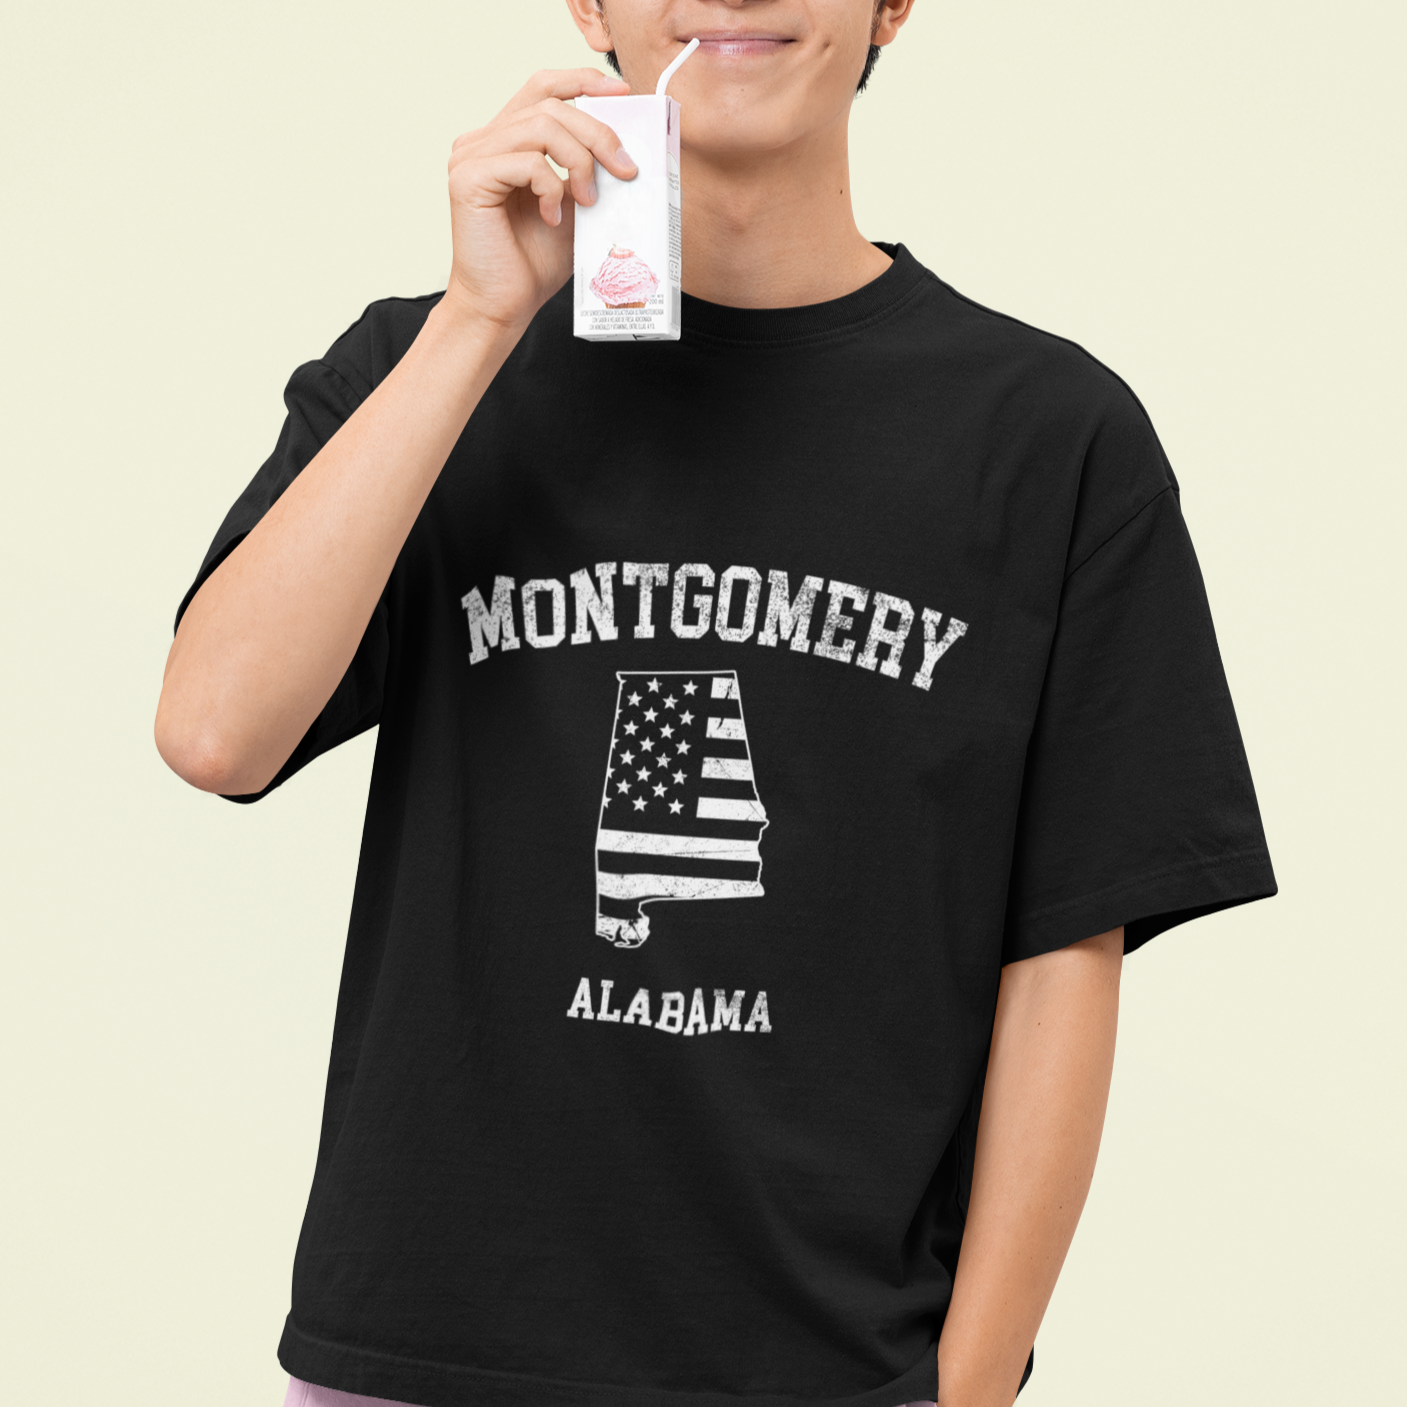 Montgomery Alabama AL Vintage American Flag T Shirt TS02